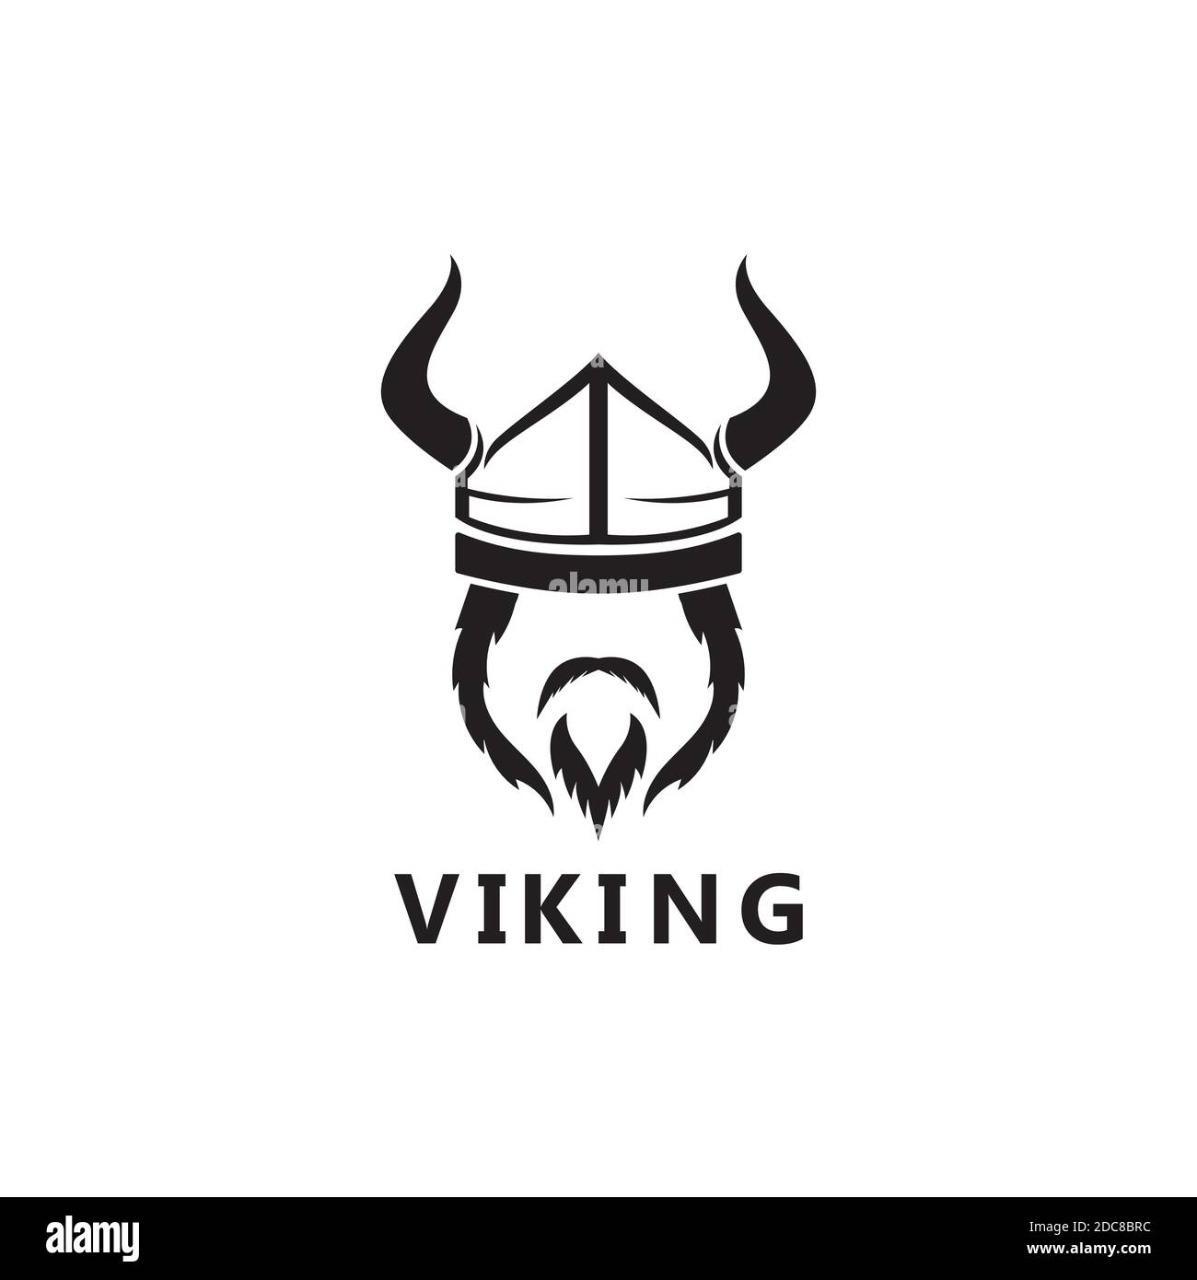 Vikingo95?s=8m3ko+yn45a1lvdz5+zqqpwaoobo6vkuk1lneq8wlmc=